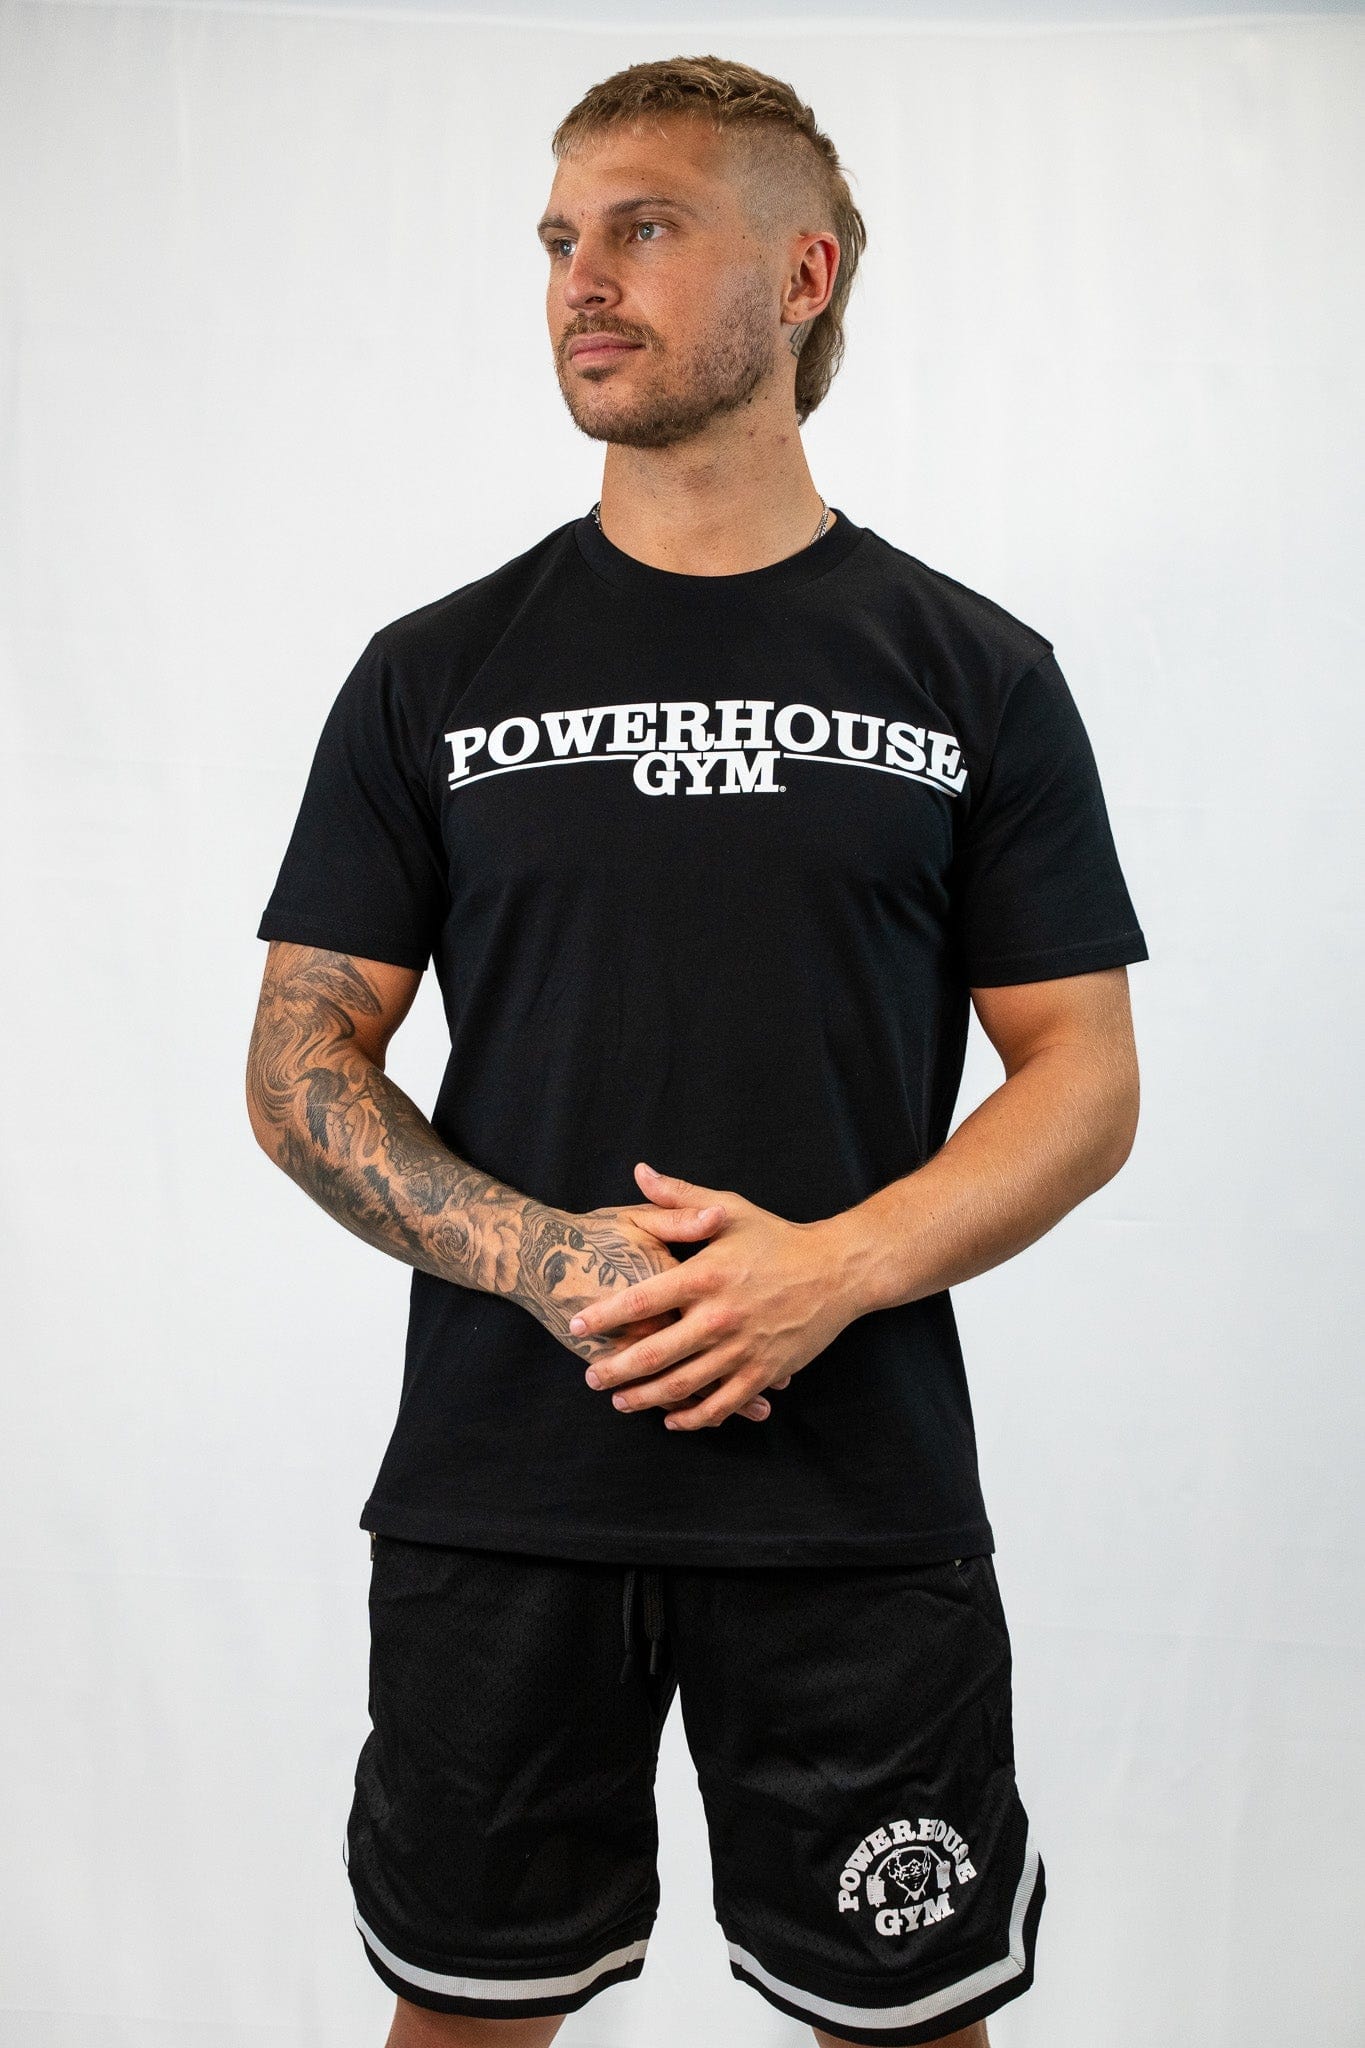 Powerhouse Gym Pro Shop Small T-Shirt PHG Edition Black/ Red